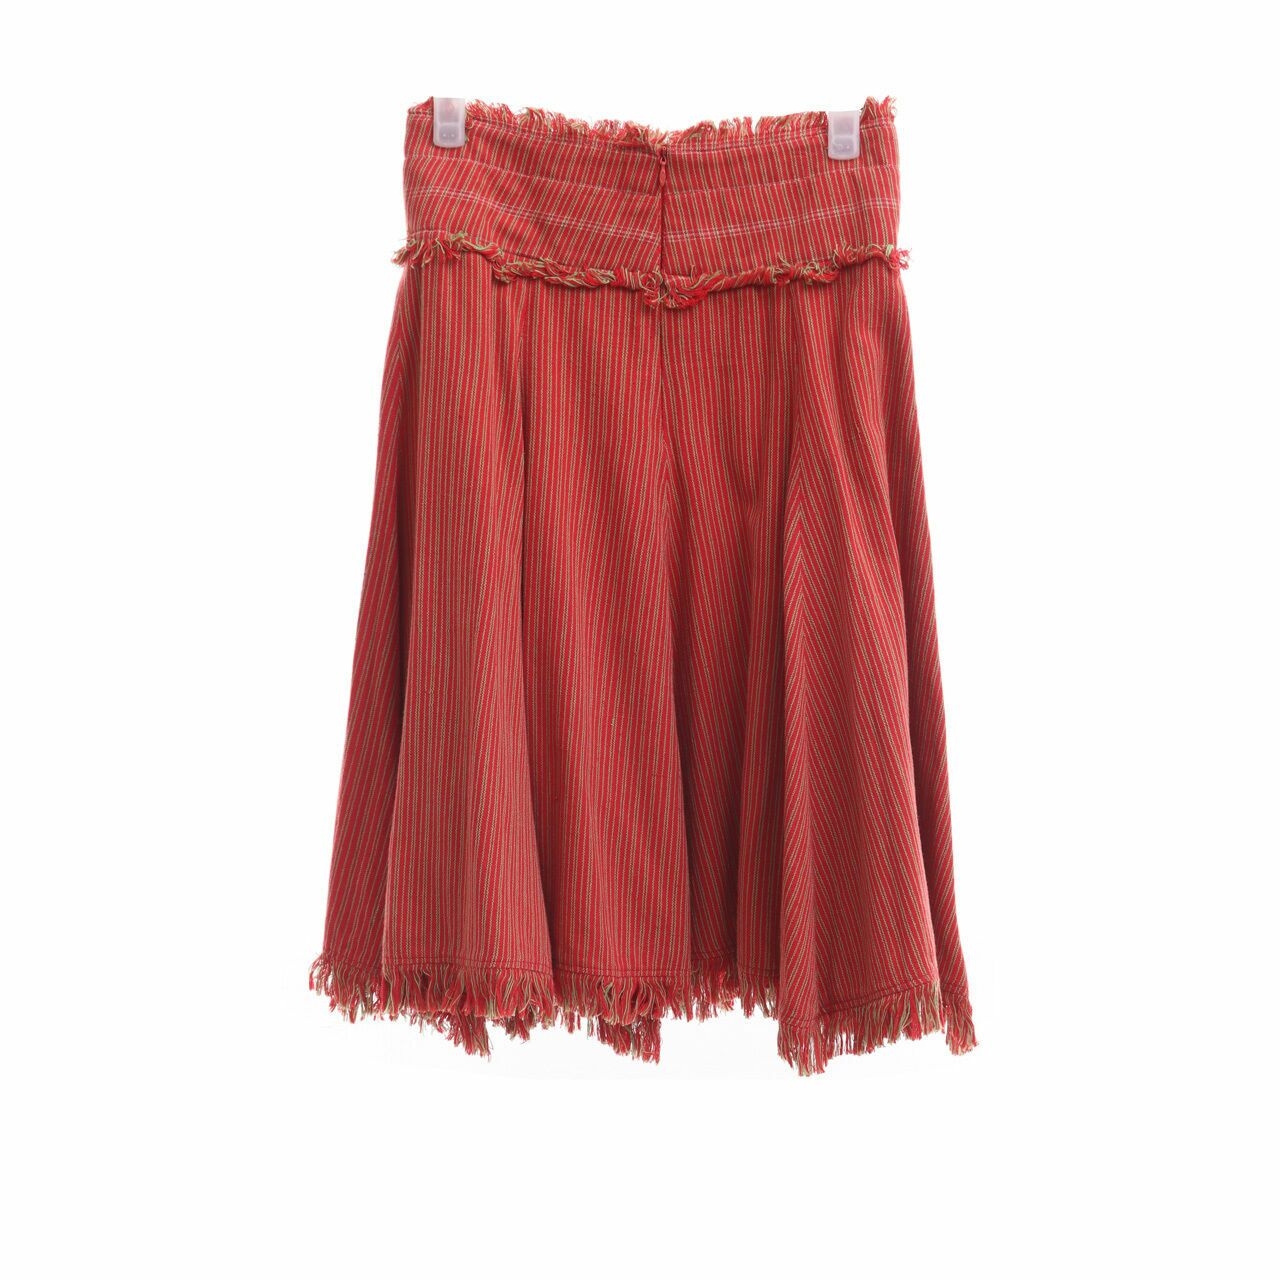 Lekat Red Patterned Midi Skirt